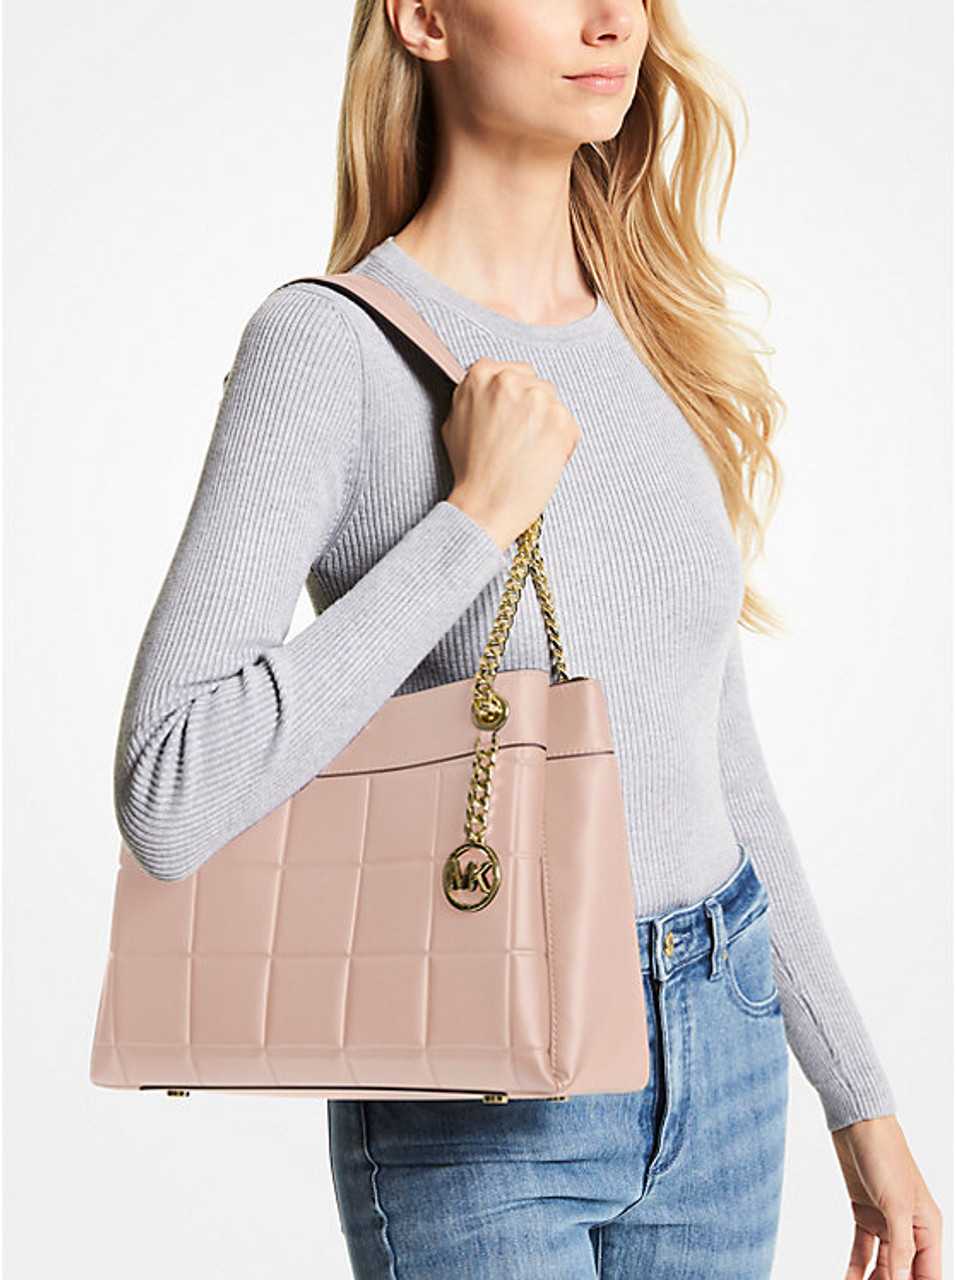 michael kors purse used Light pink | eBay